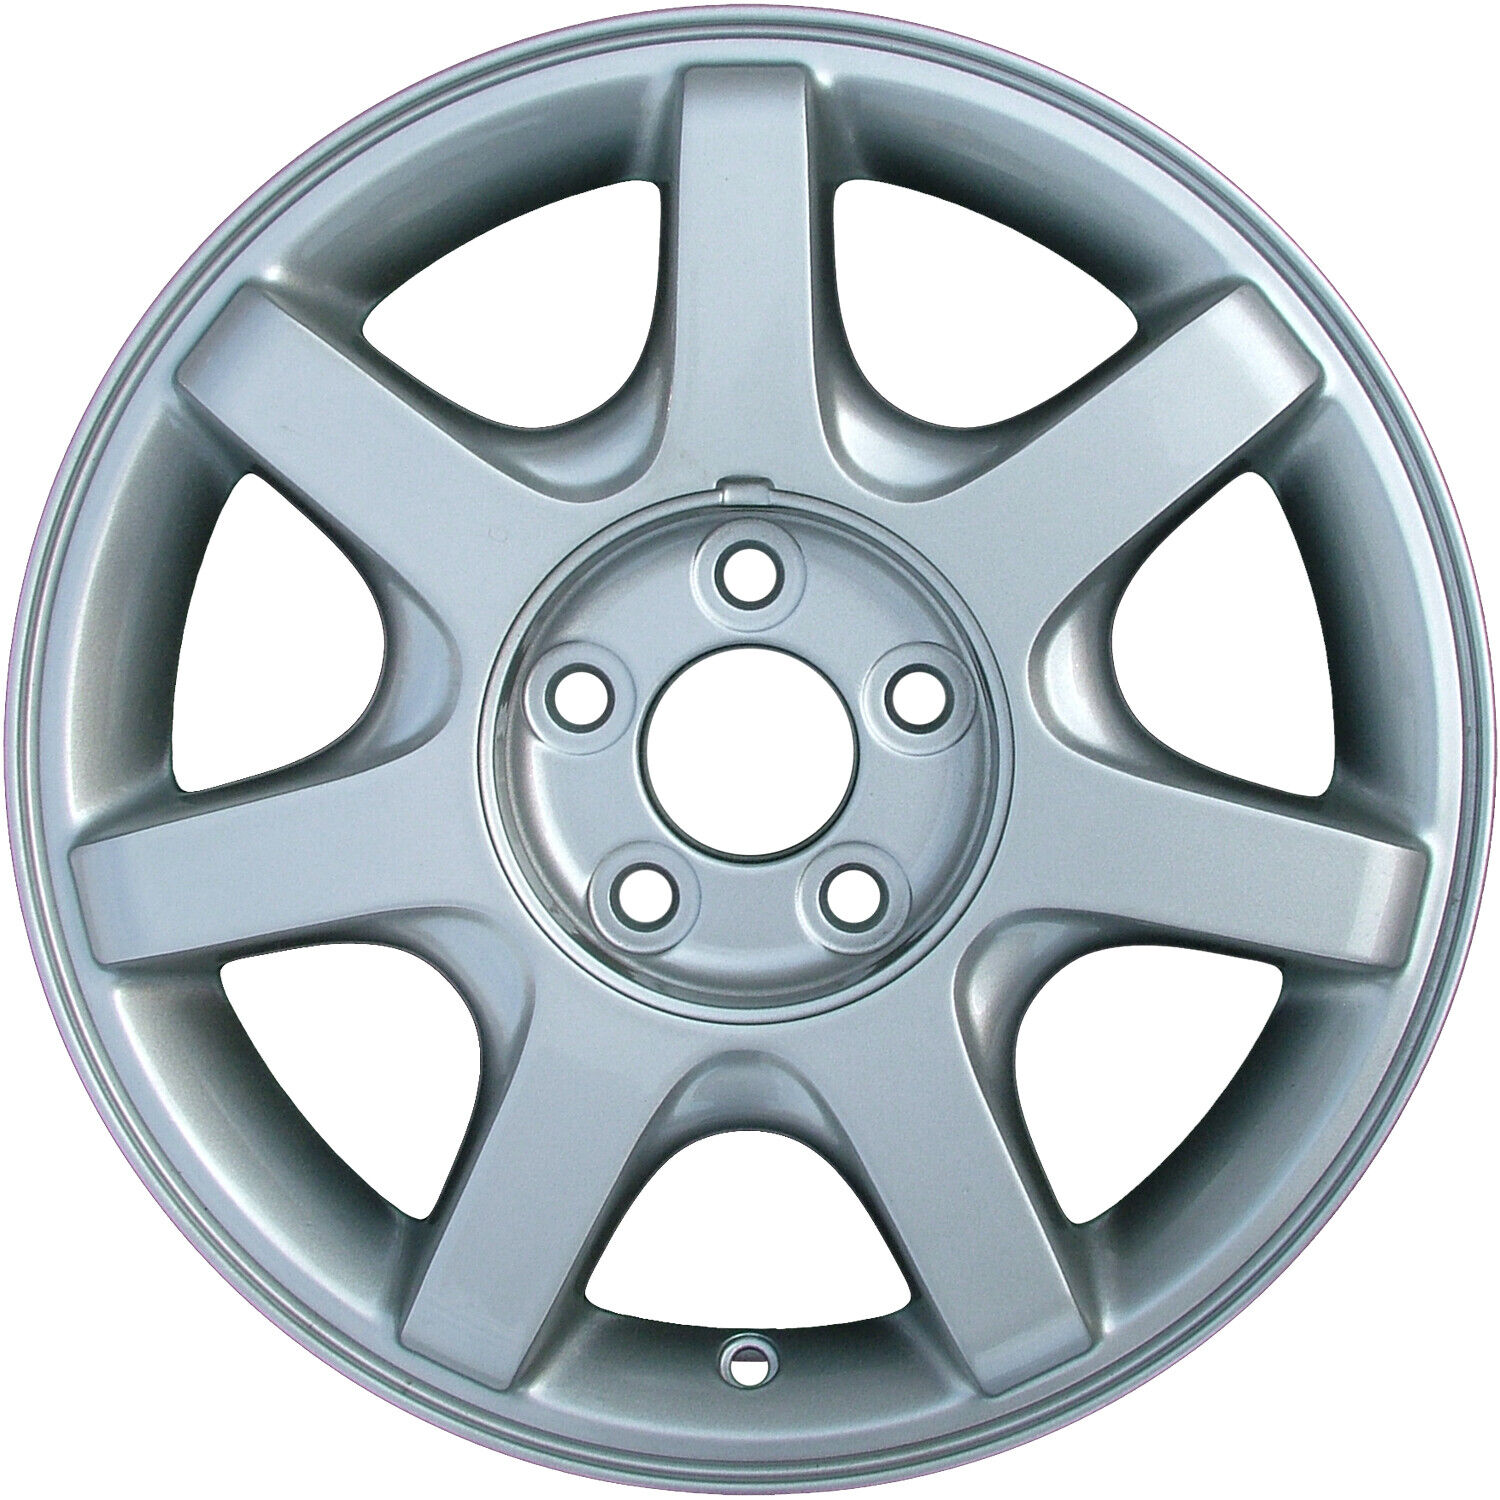 03360 Reconditioned OEM Aluminum Wheel 16x6 fits 2000-2005 Mercury Sable